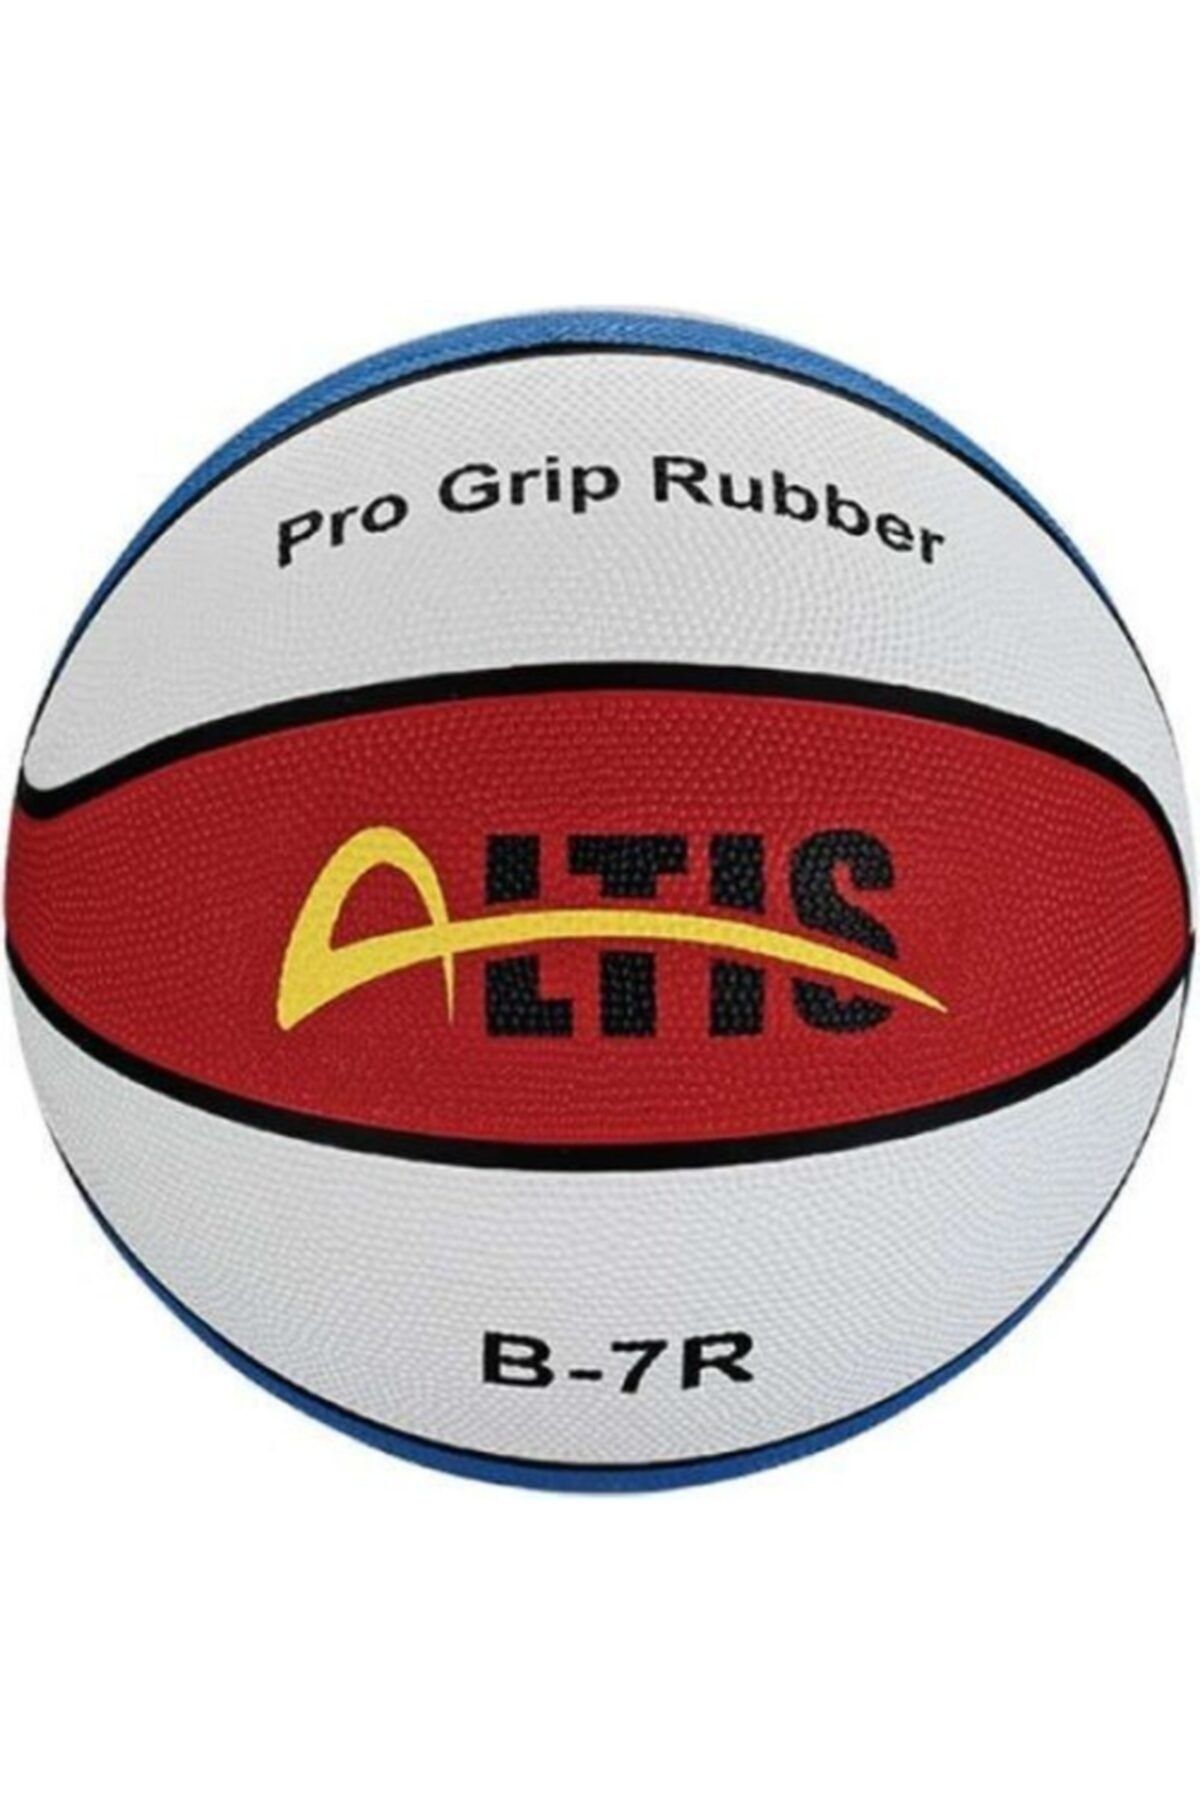 ALTIS B-7r Pro Grip No7